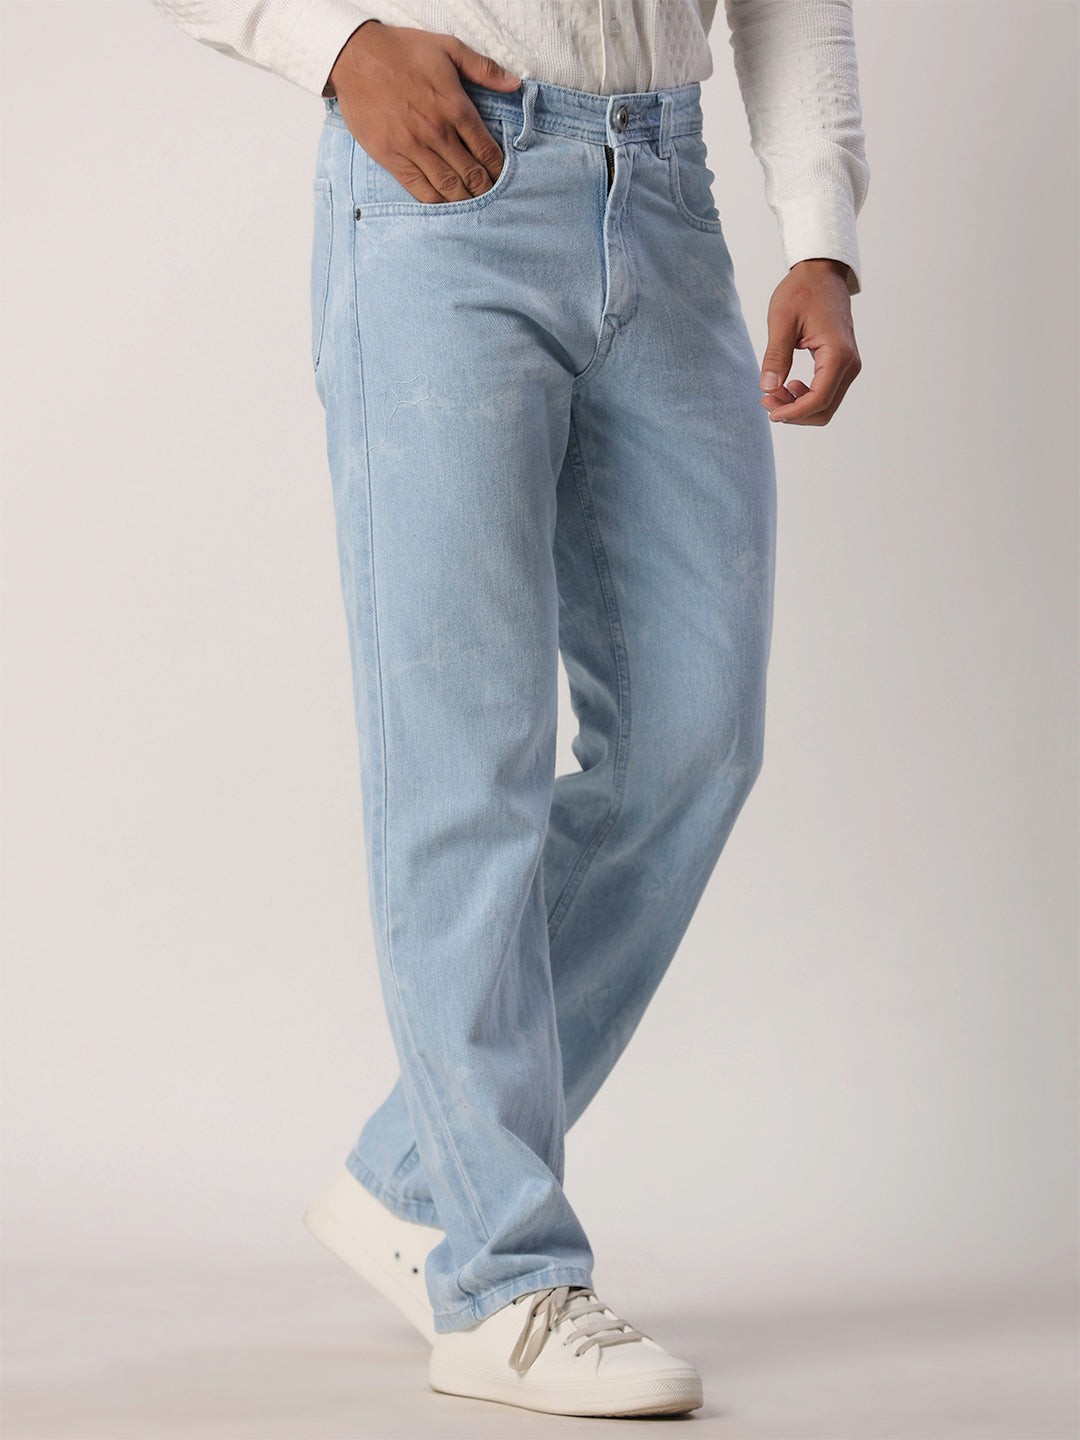 Levi's 501 Light Blue Ripped Mini Waist Jeans | PacSun